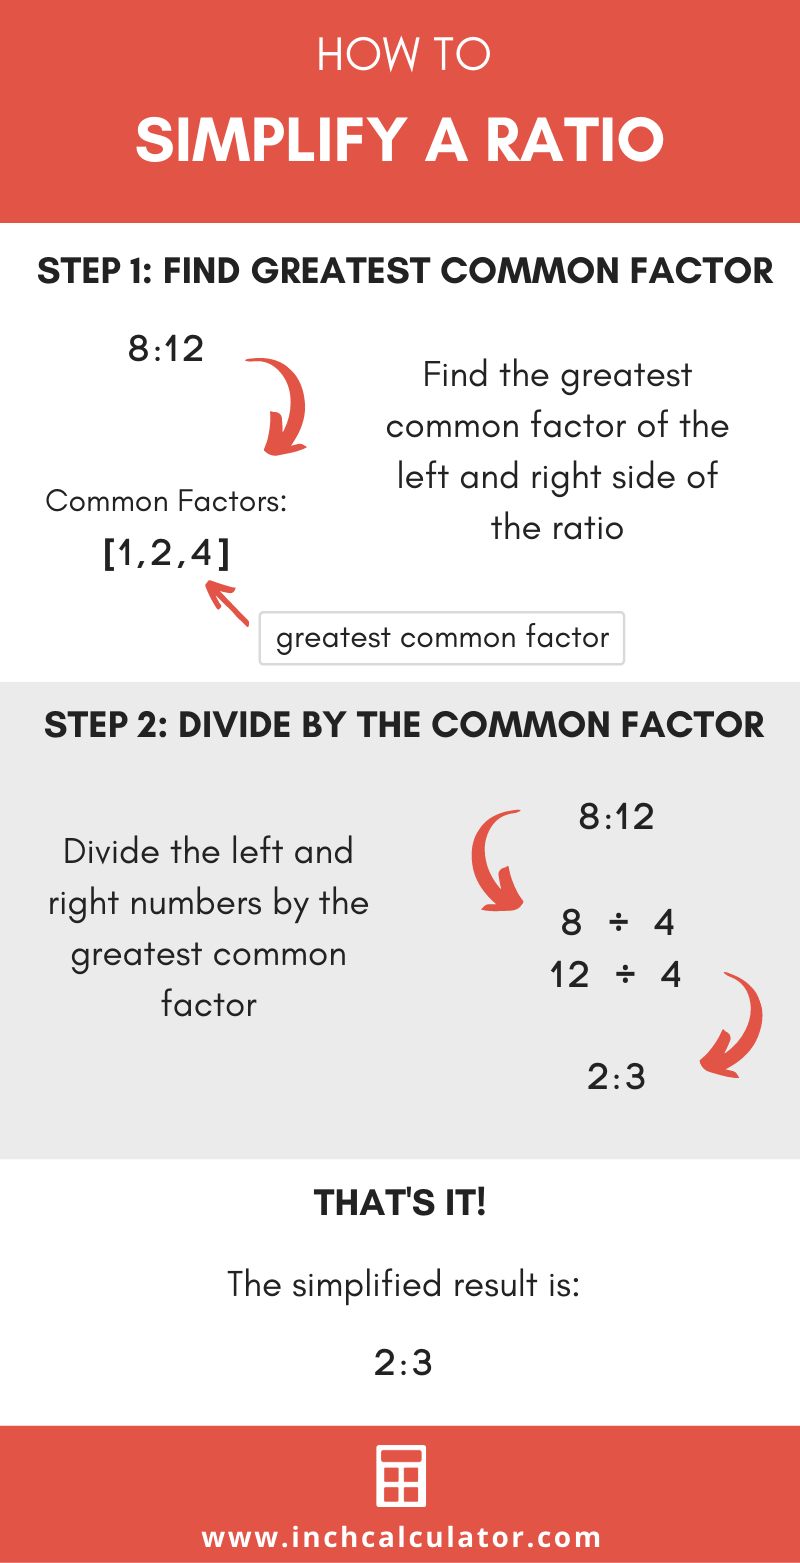 Share ratio simplifier